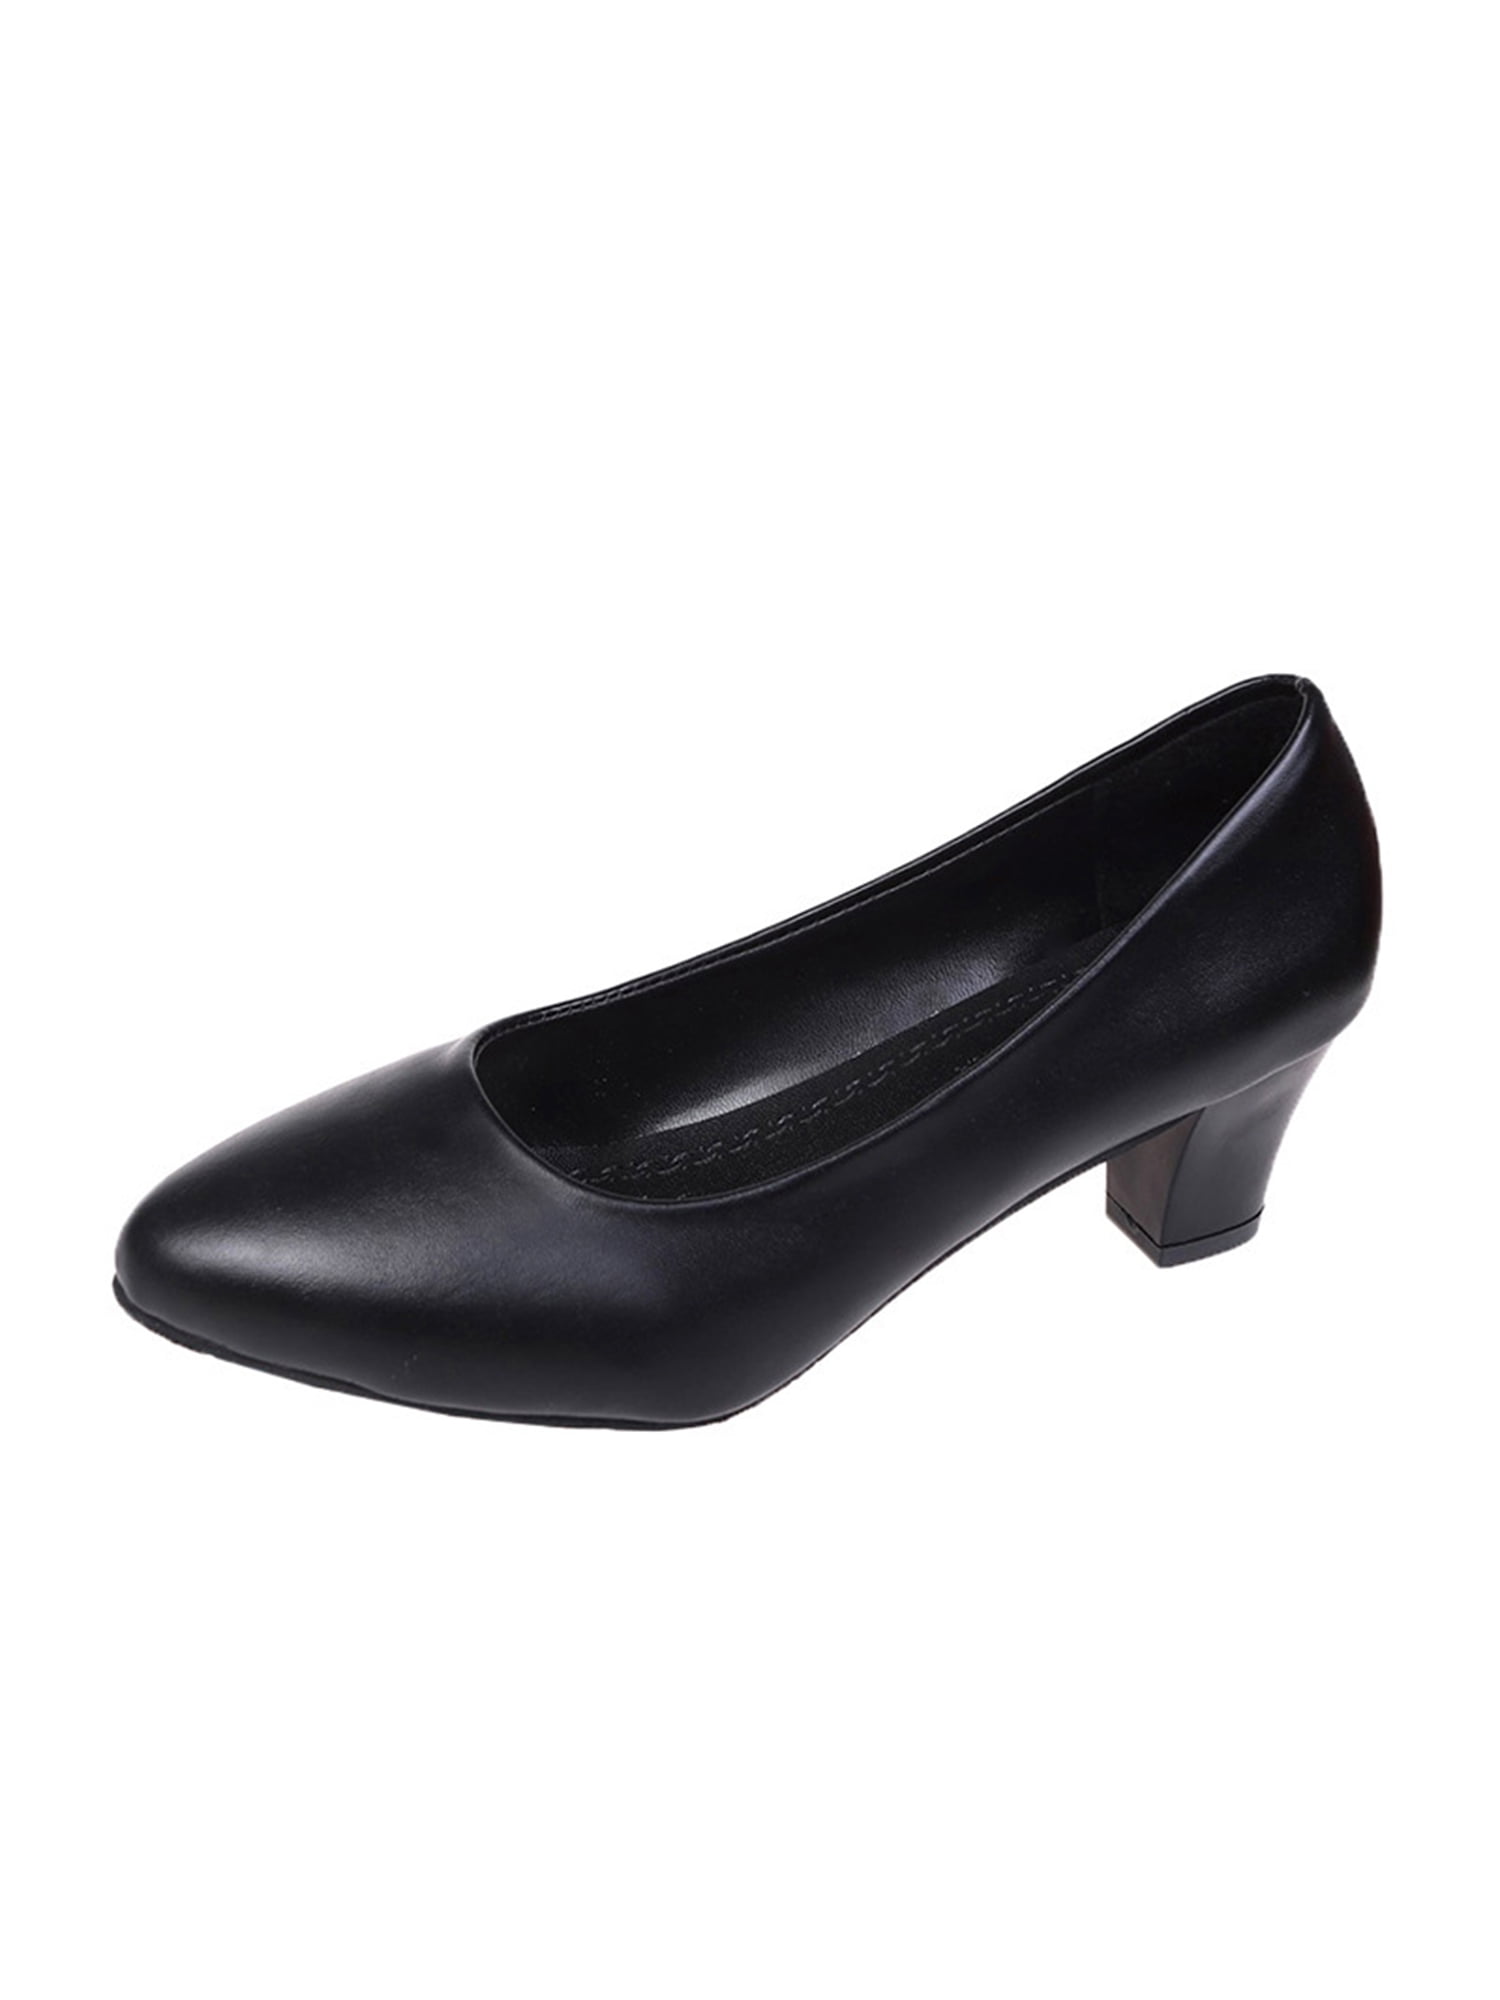 Amazon.com | Govdaeor Women's Chunky Block Heel Pumps Pointed Toe Slingback  D'Orsay Ankle Buckle Casual Slip-On Low Heels Ladies Office Dress Shoes  Nude Beige | Pumps